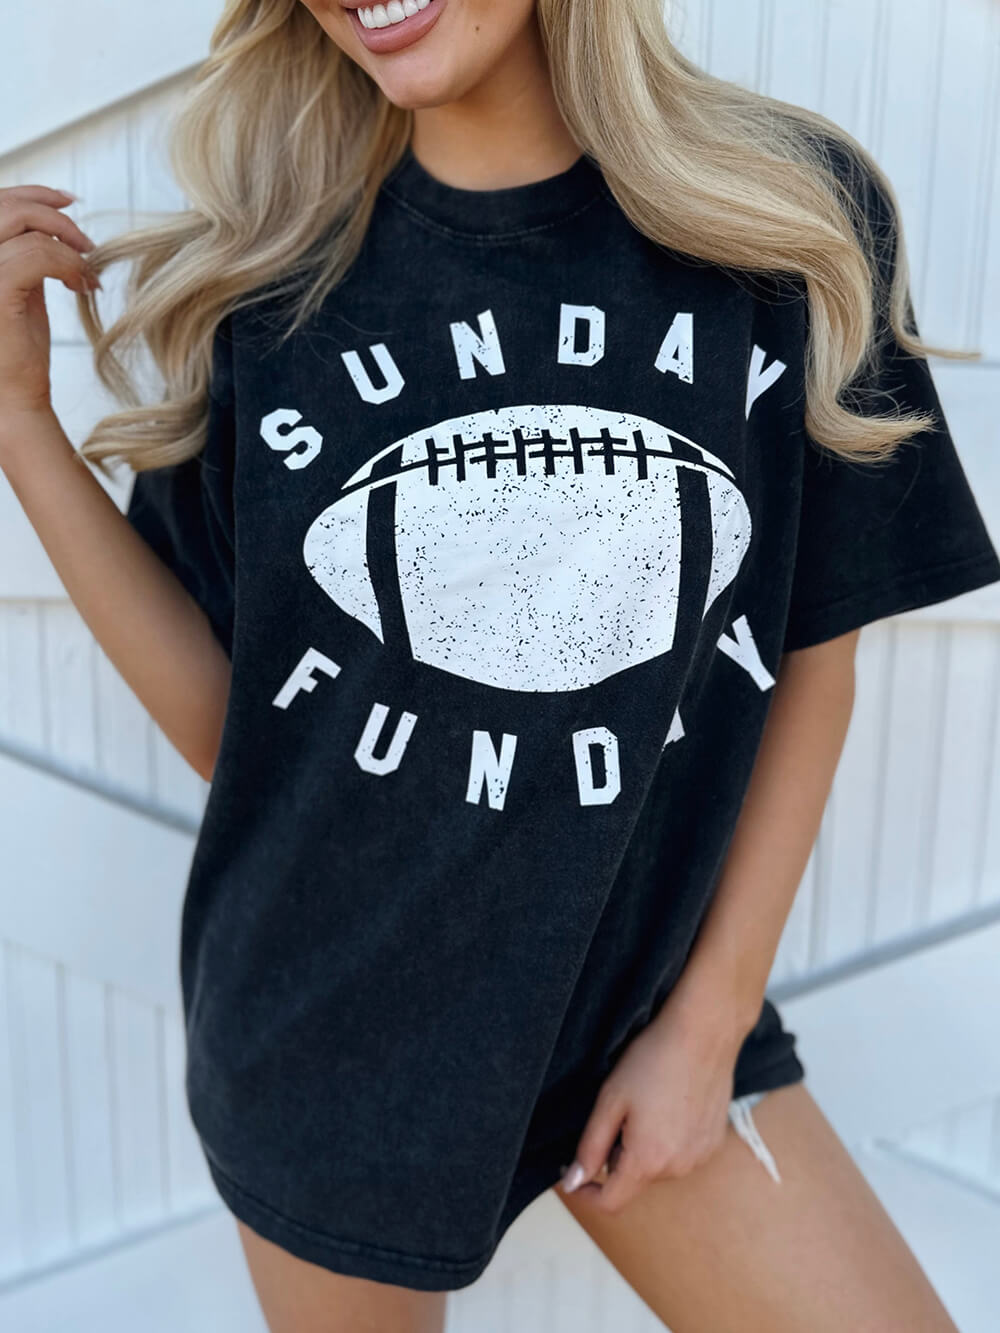 Camiseta com estampa “Sunday Funday” com lavagem mineral